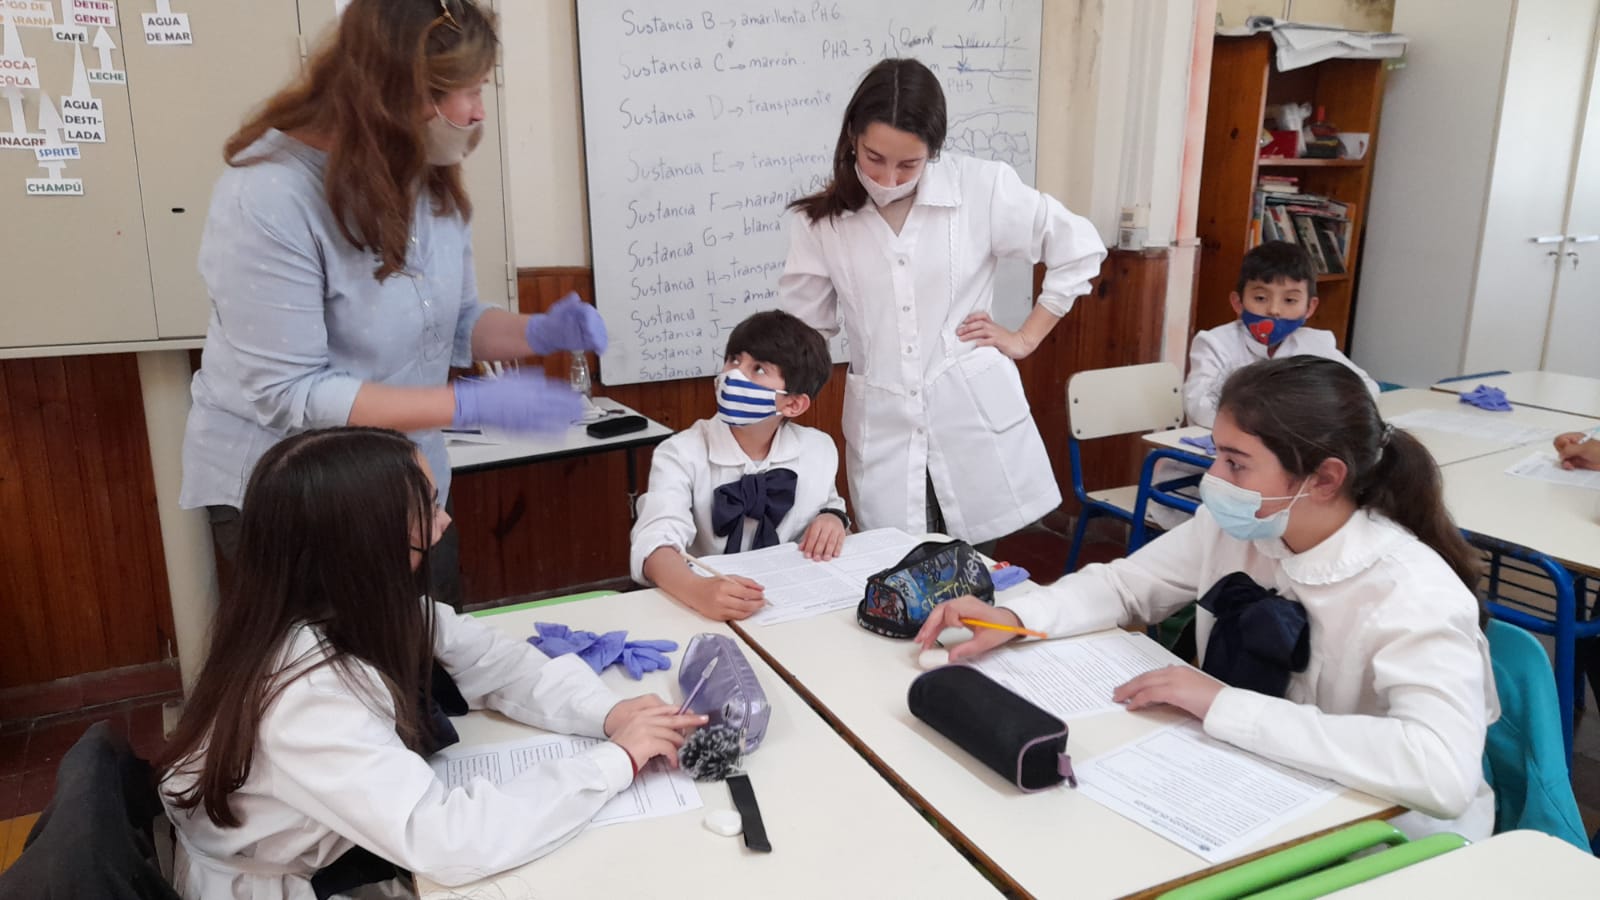 GLOBE students at School No. 168, Rincón del Colorado, Canelones, Uruguay; filling out soil data sheets